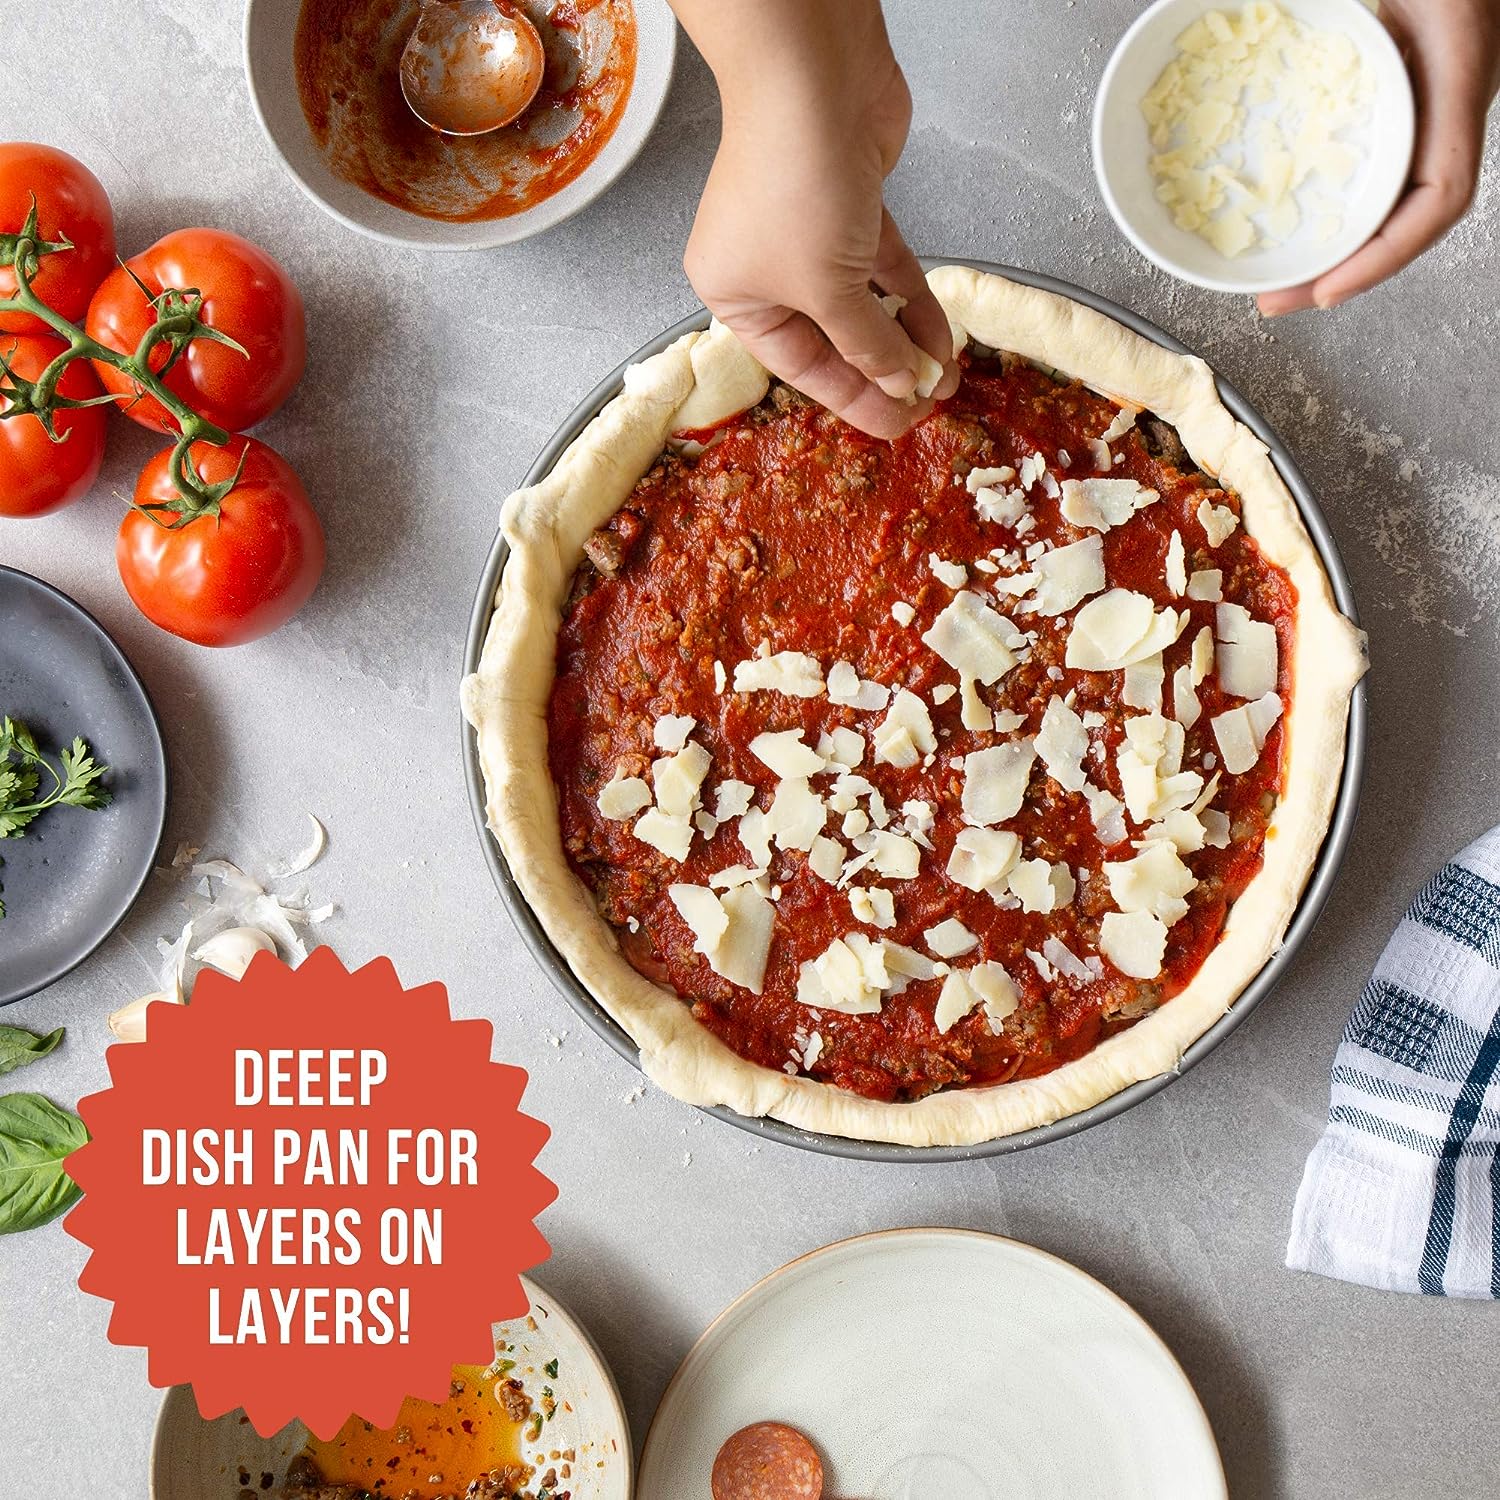 Chef Pomodoro Detroit Style Pizza Pan, 14x10, Non-Stick Aluminum